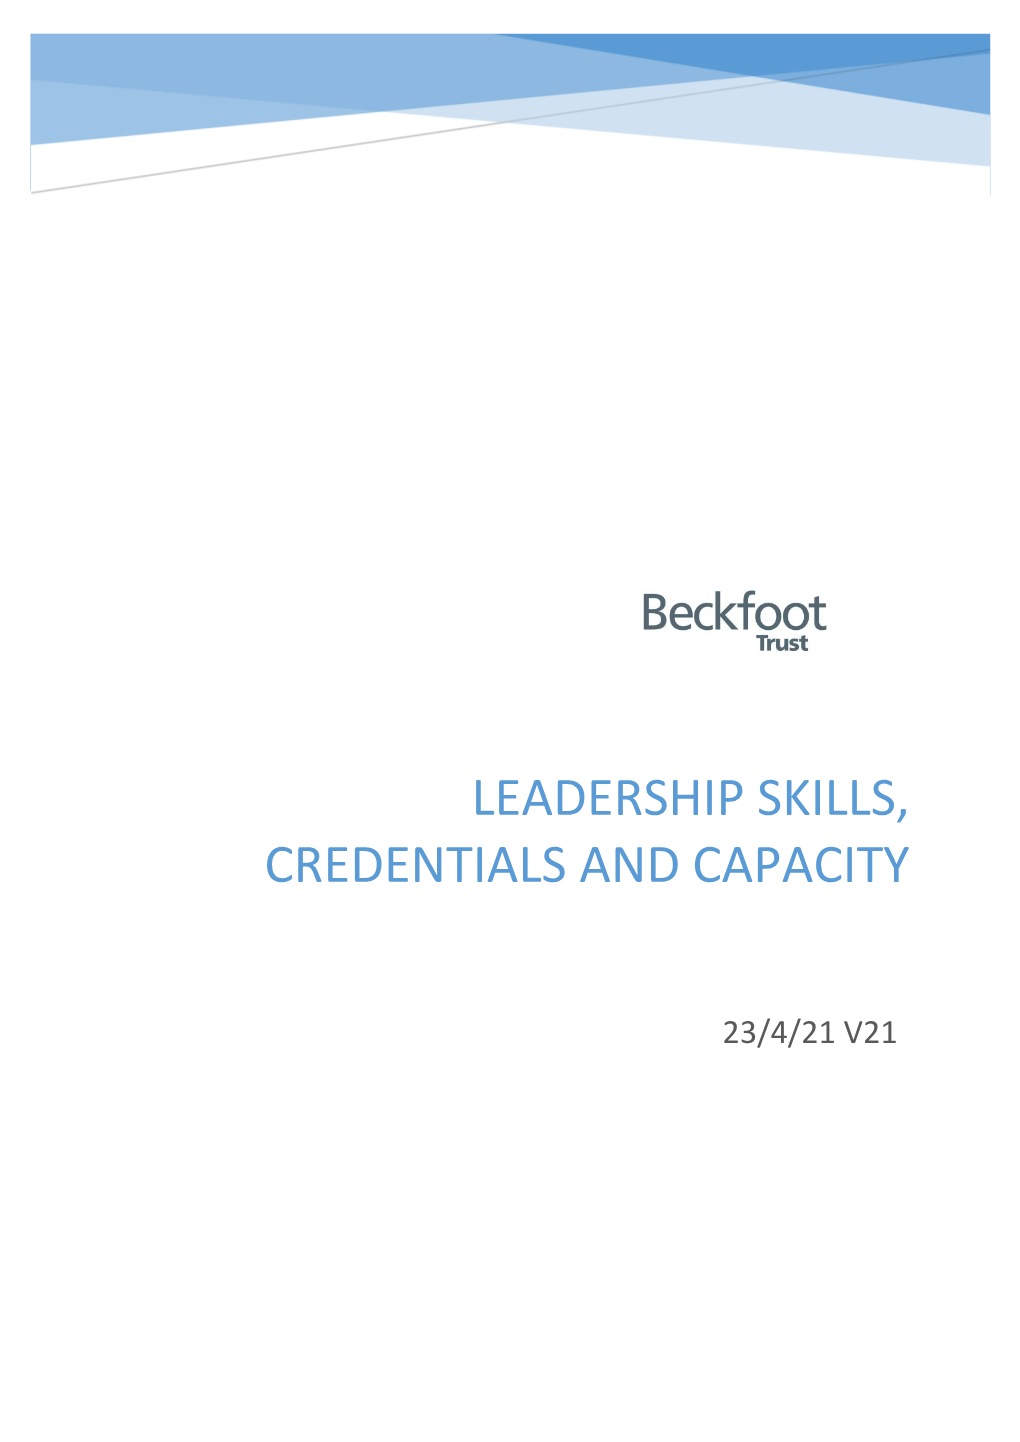 Draft Beckfoot Trust Governance Credentials 23-4-21